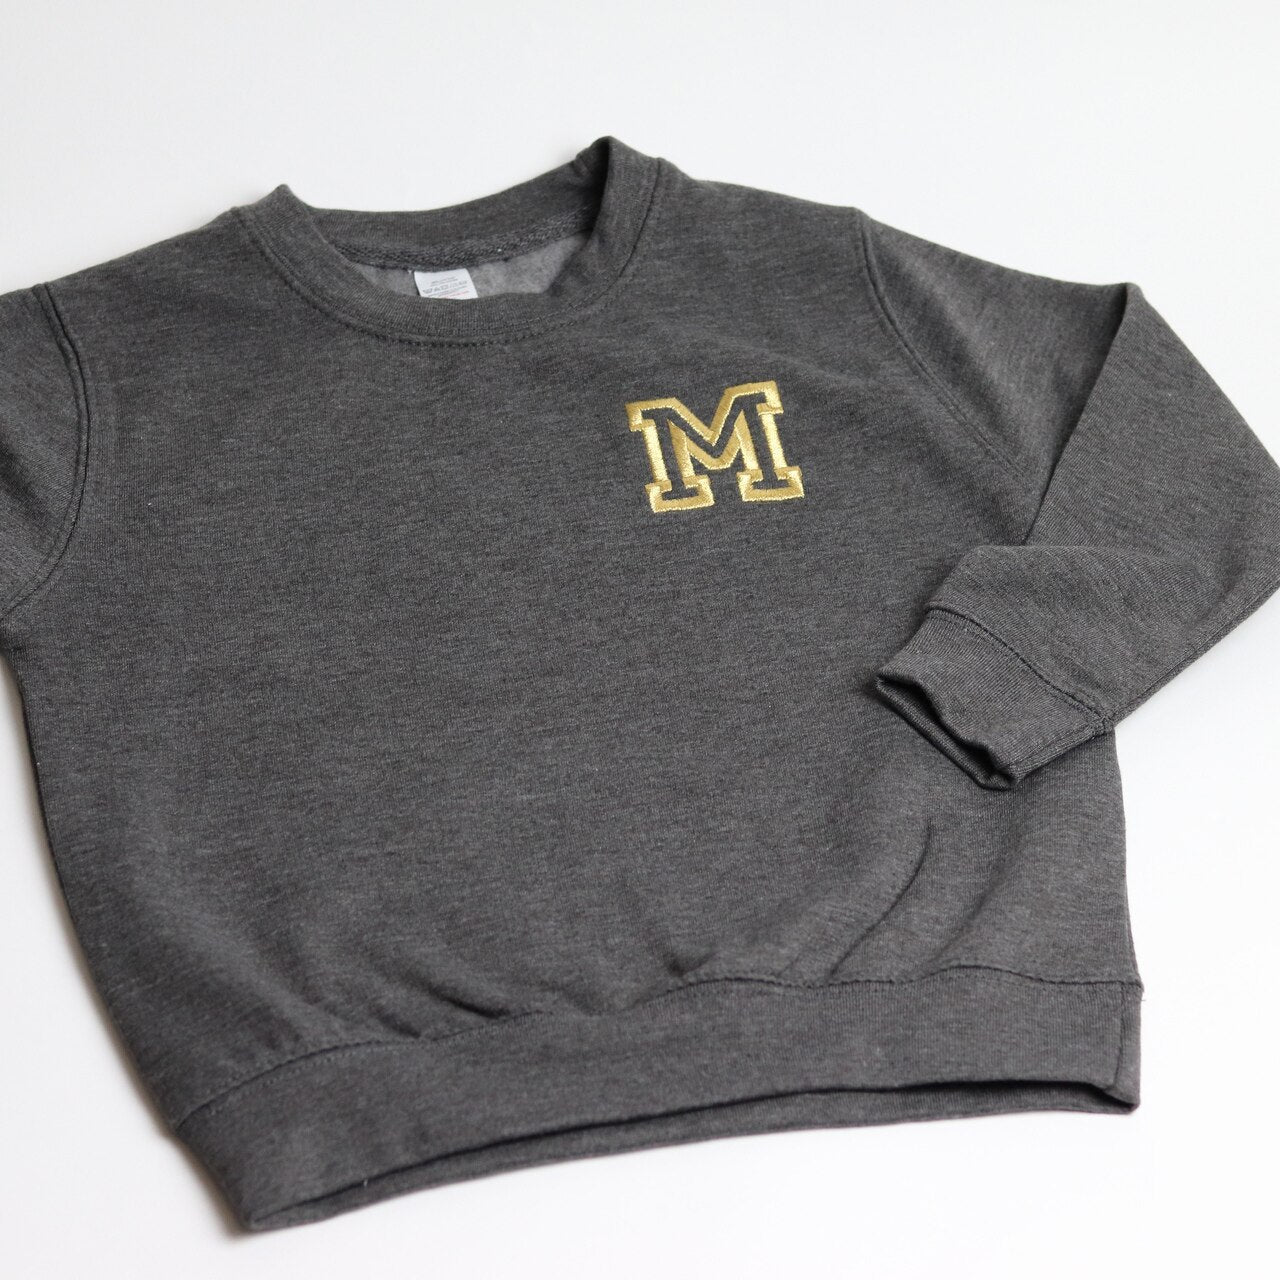 All Star Initial Embroidered Children's Sweatshirt